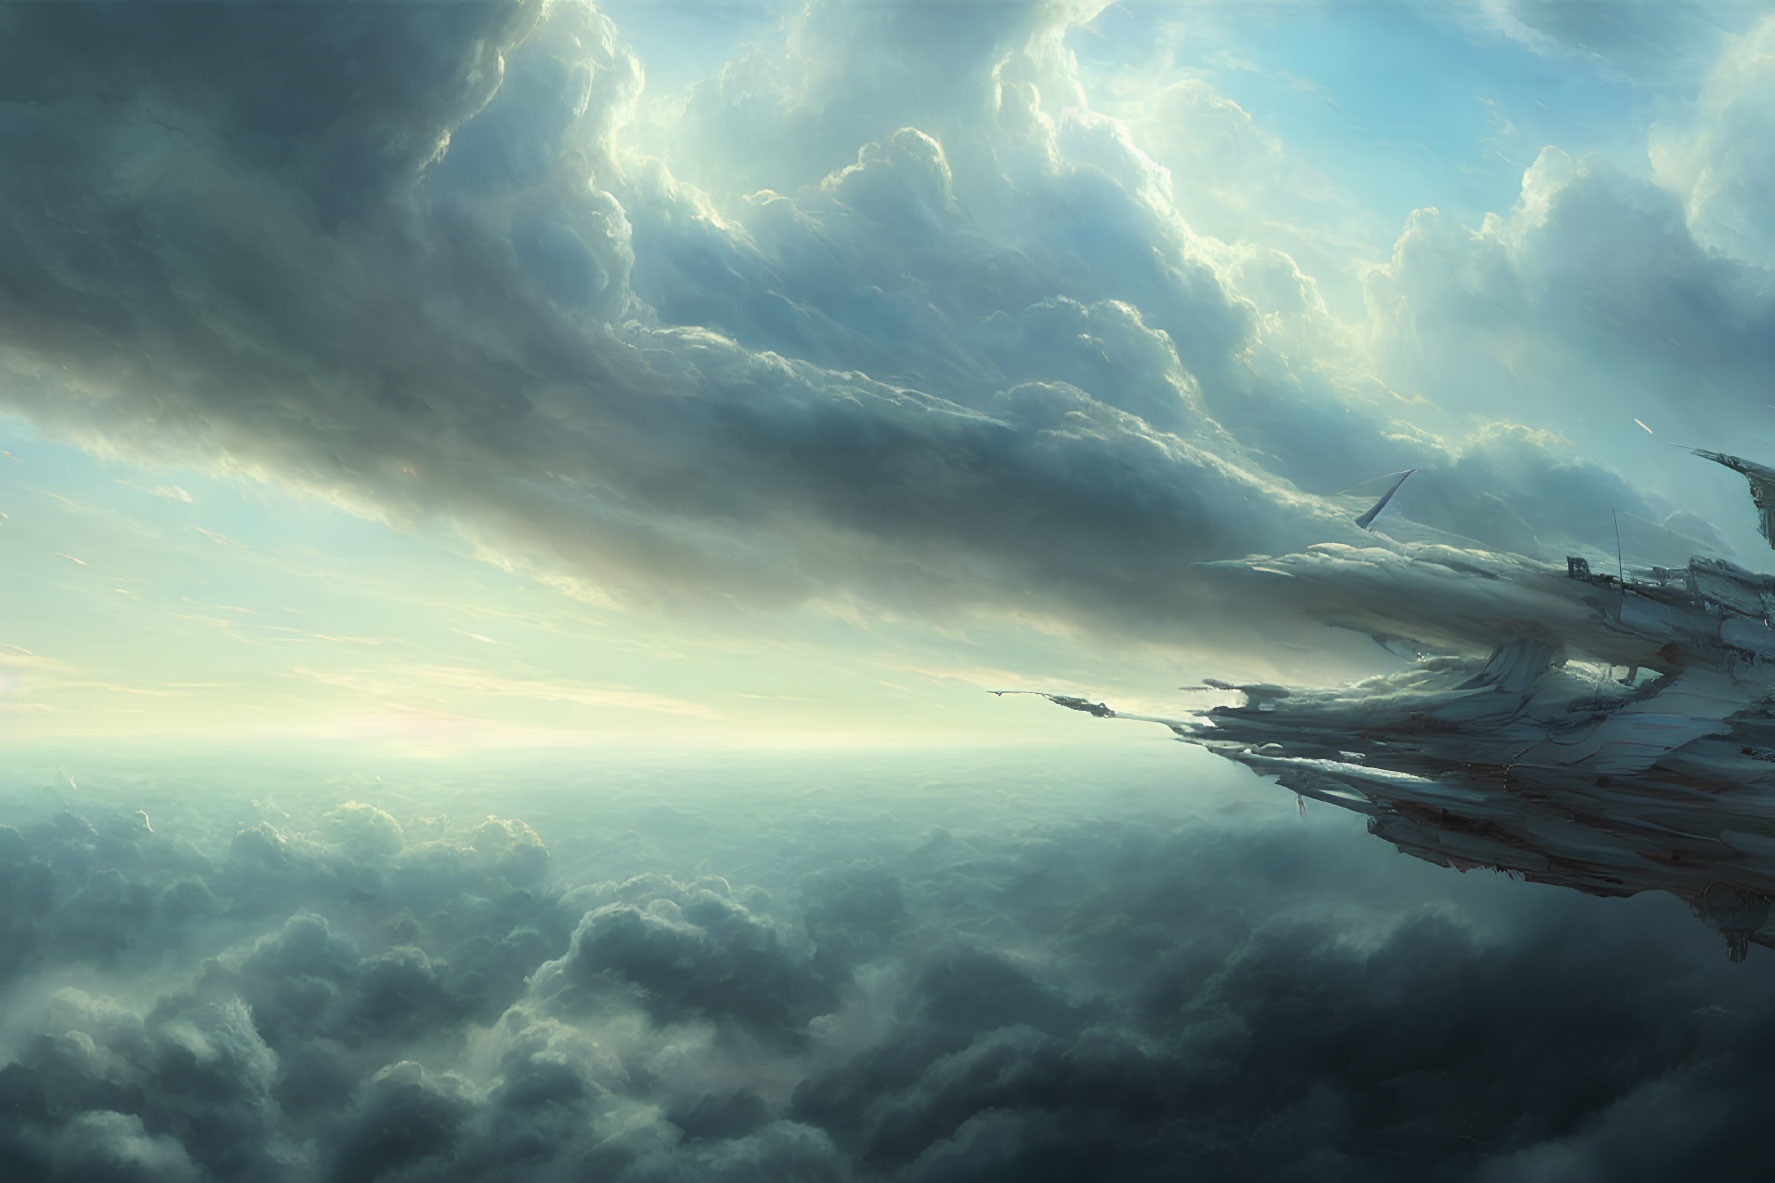 Ethereal floating landmass in majestic cloud landscape